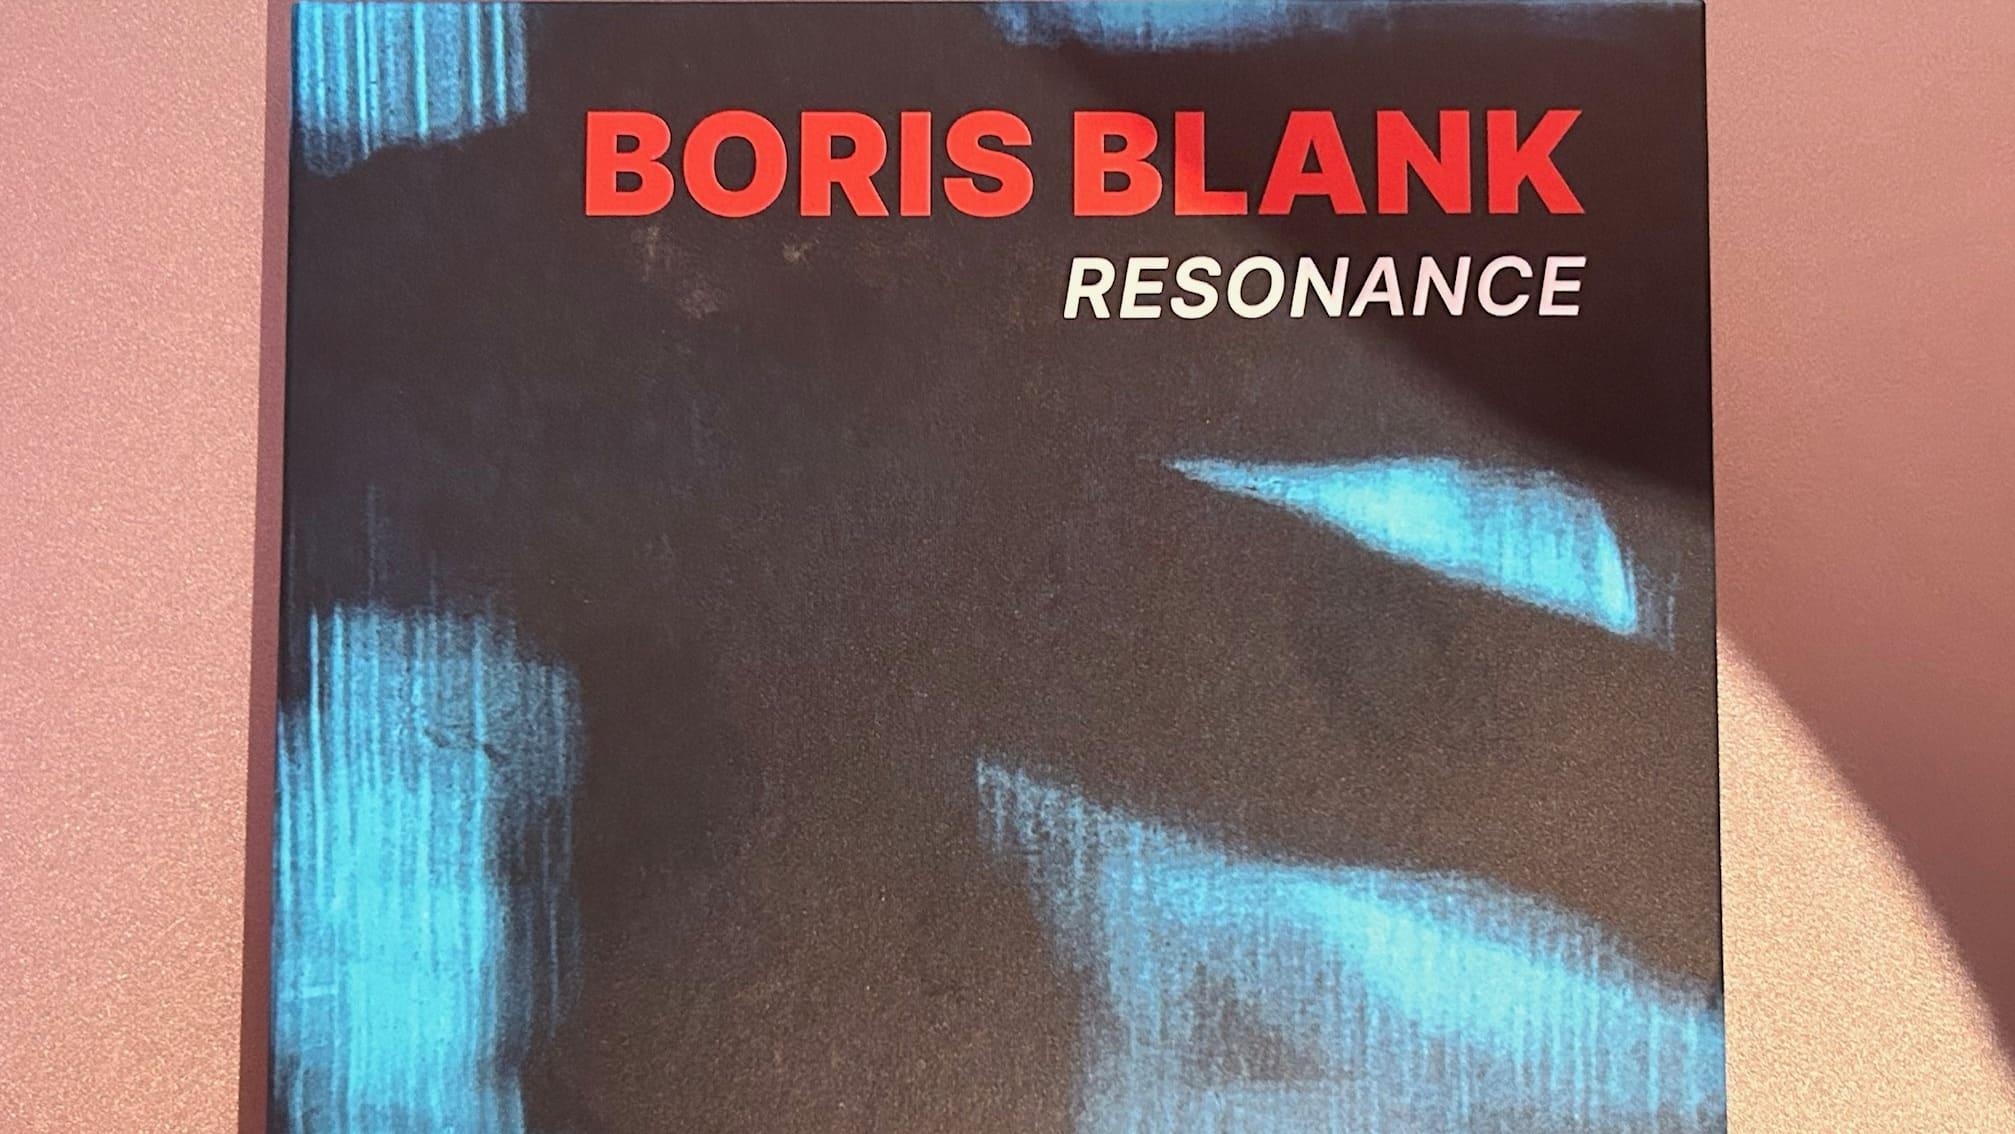 Boris Blank backdrop